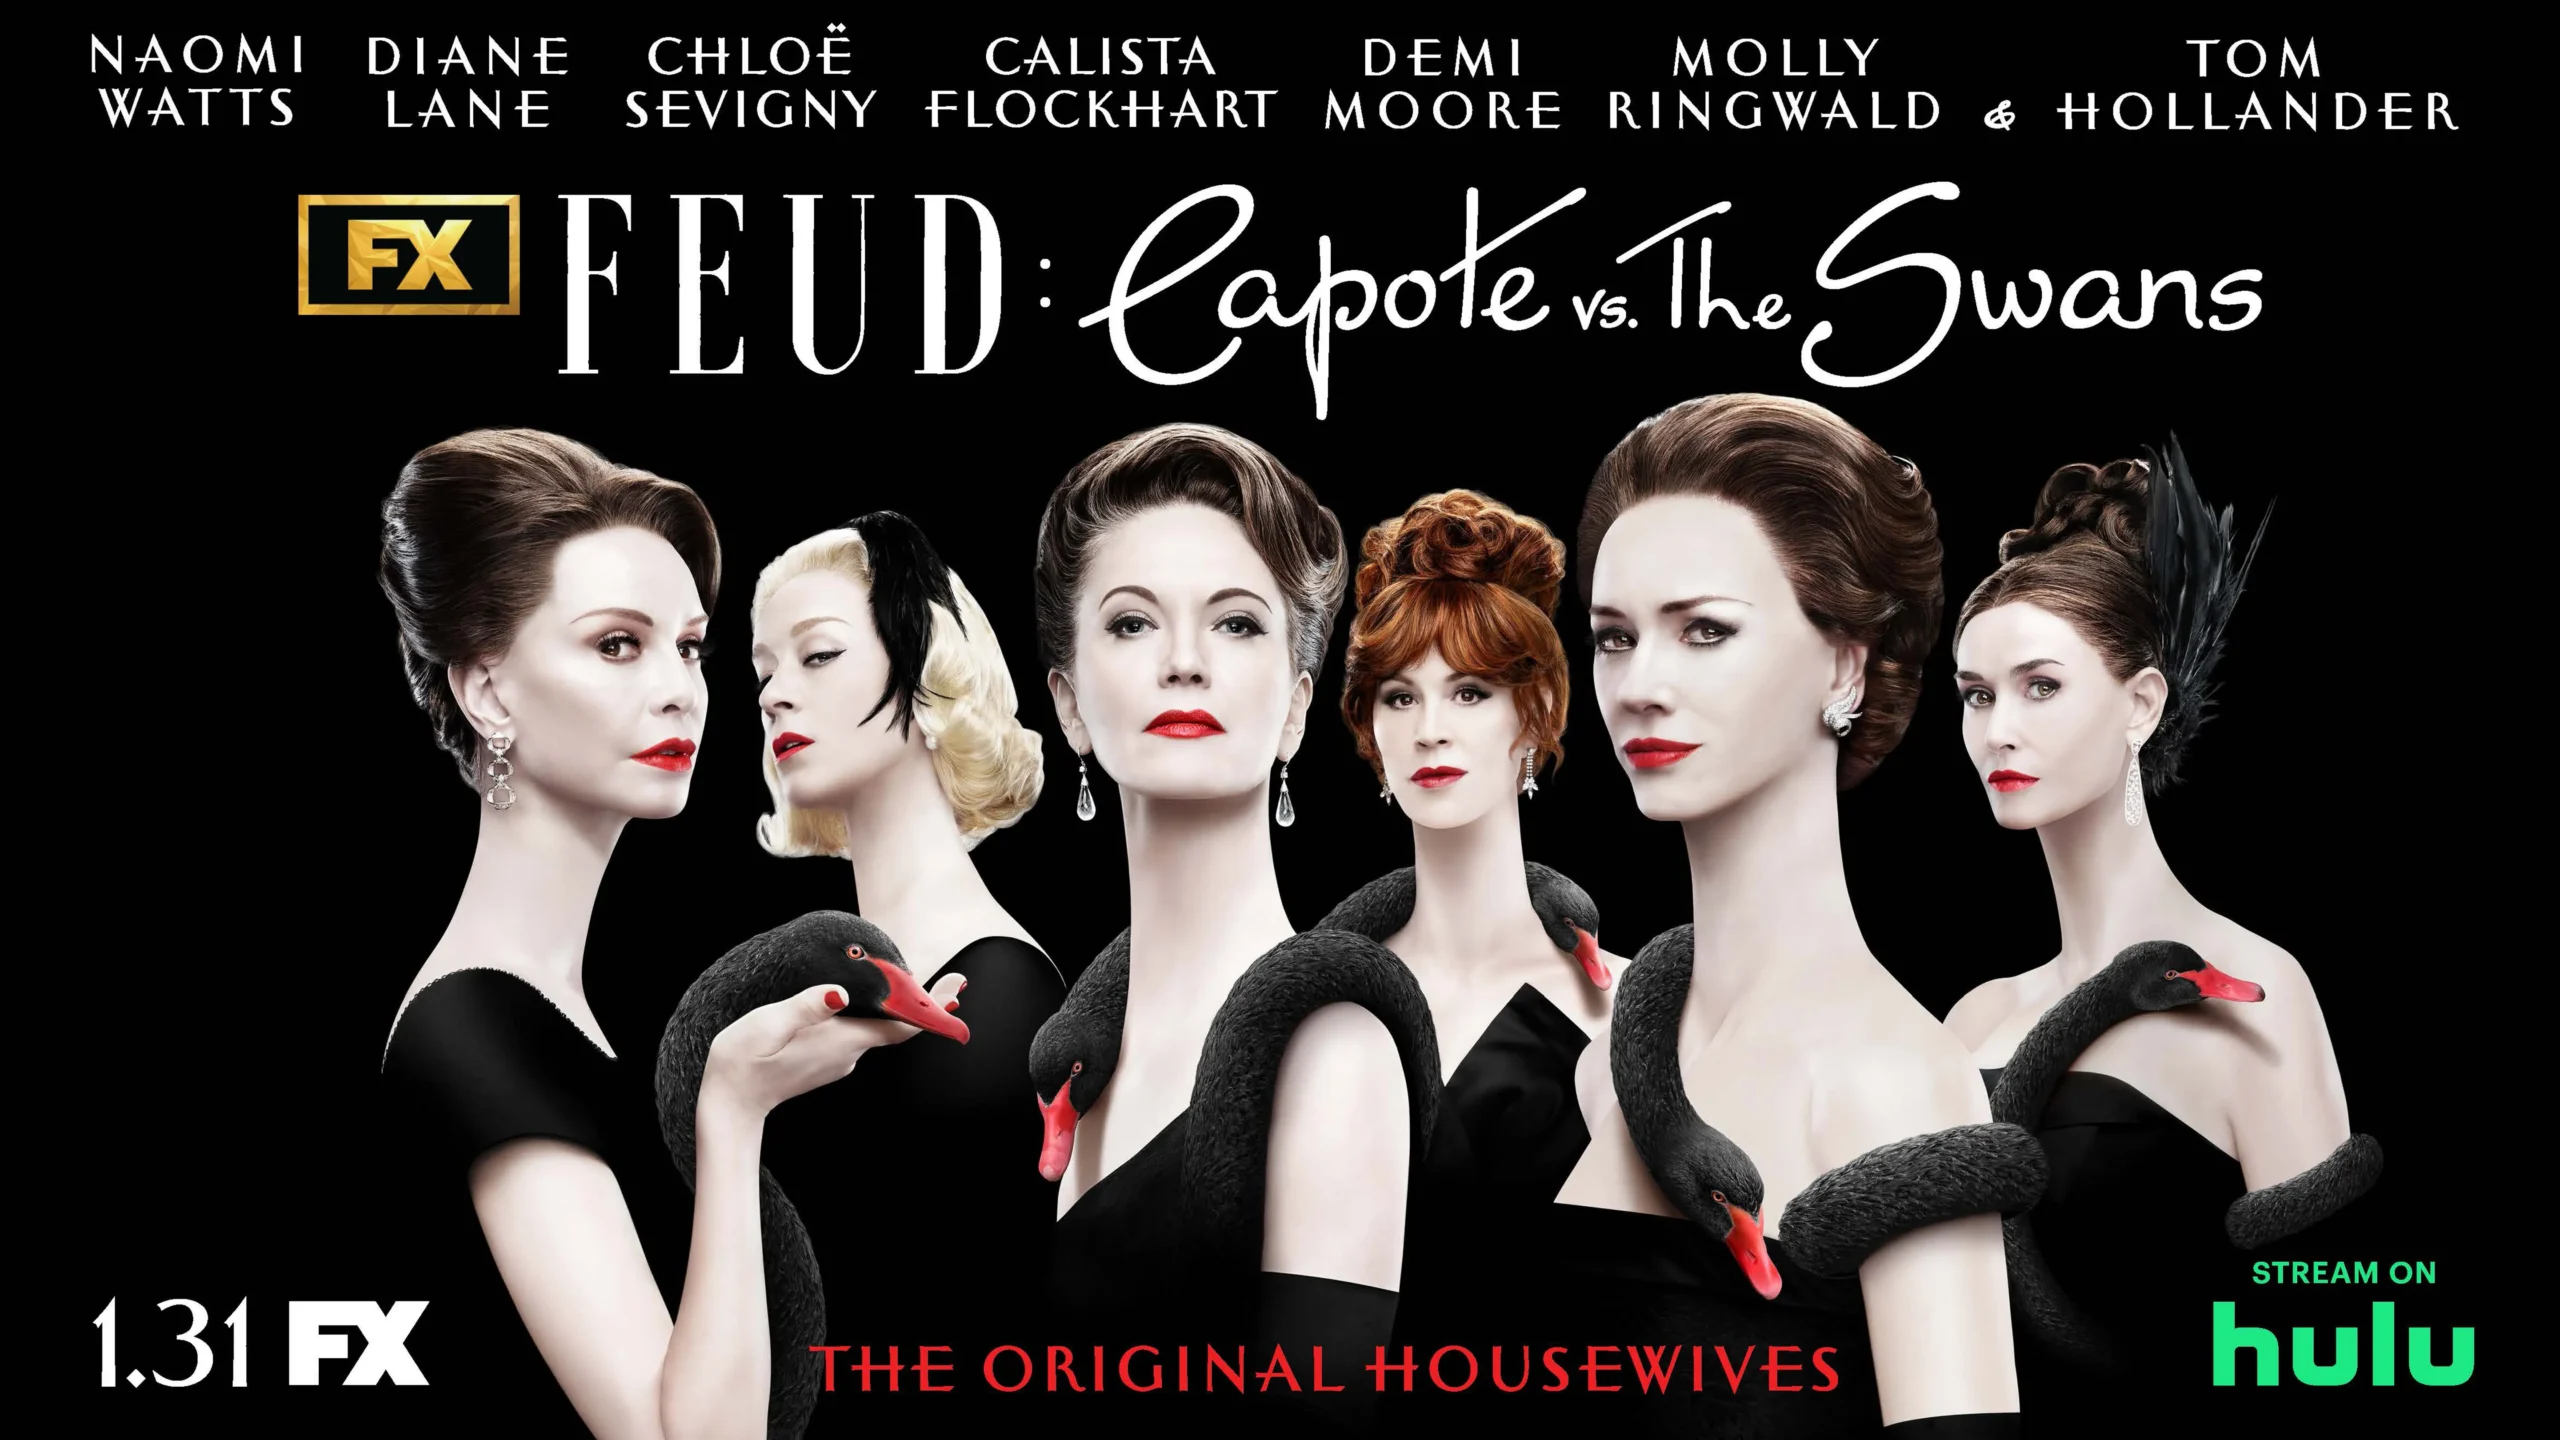 Feud: Capote vs The Swans Cast